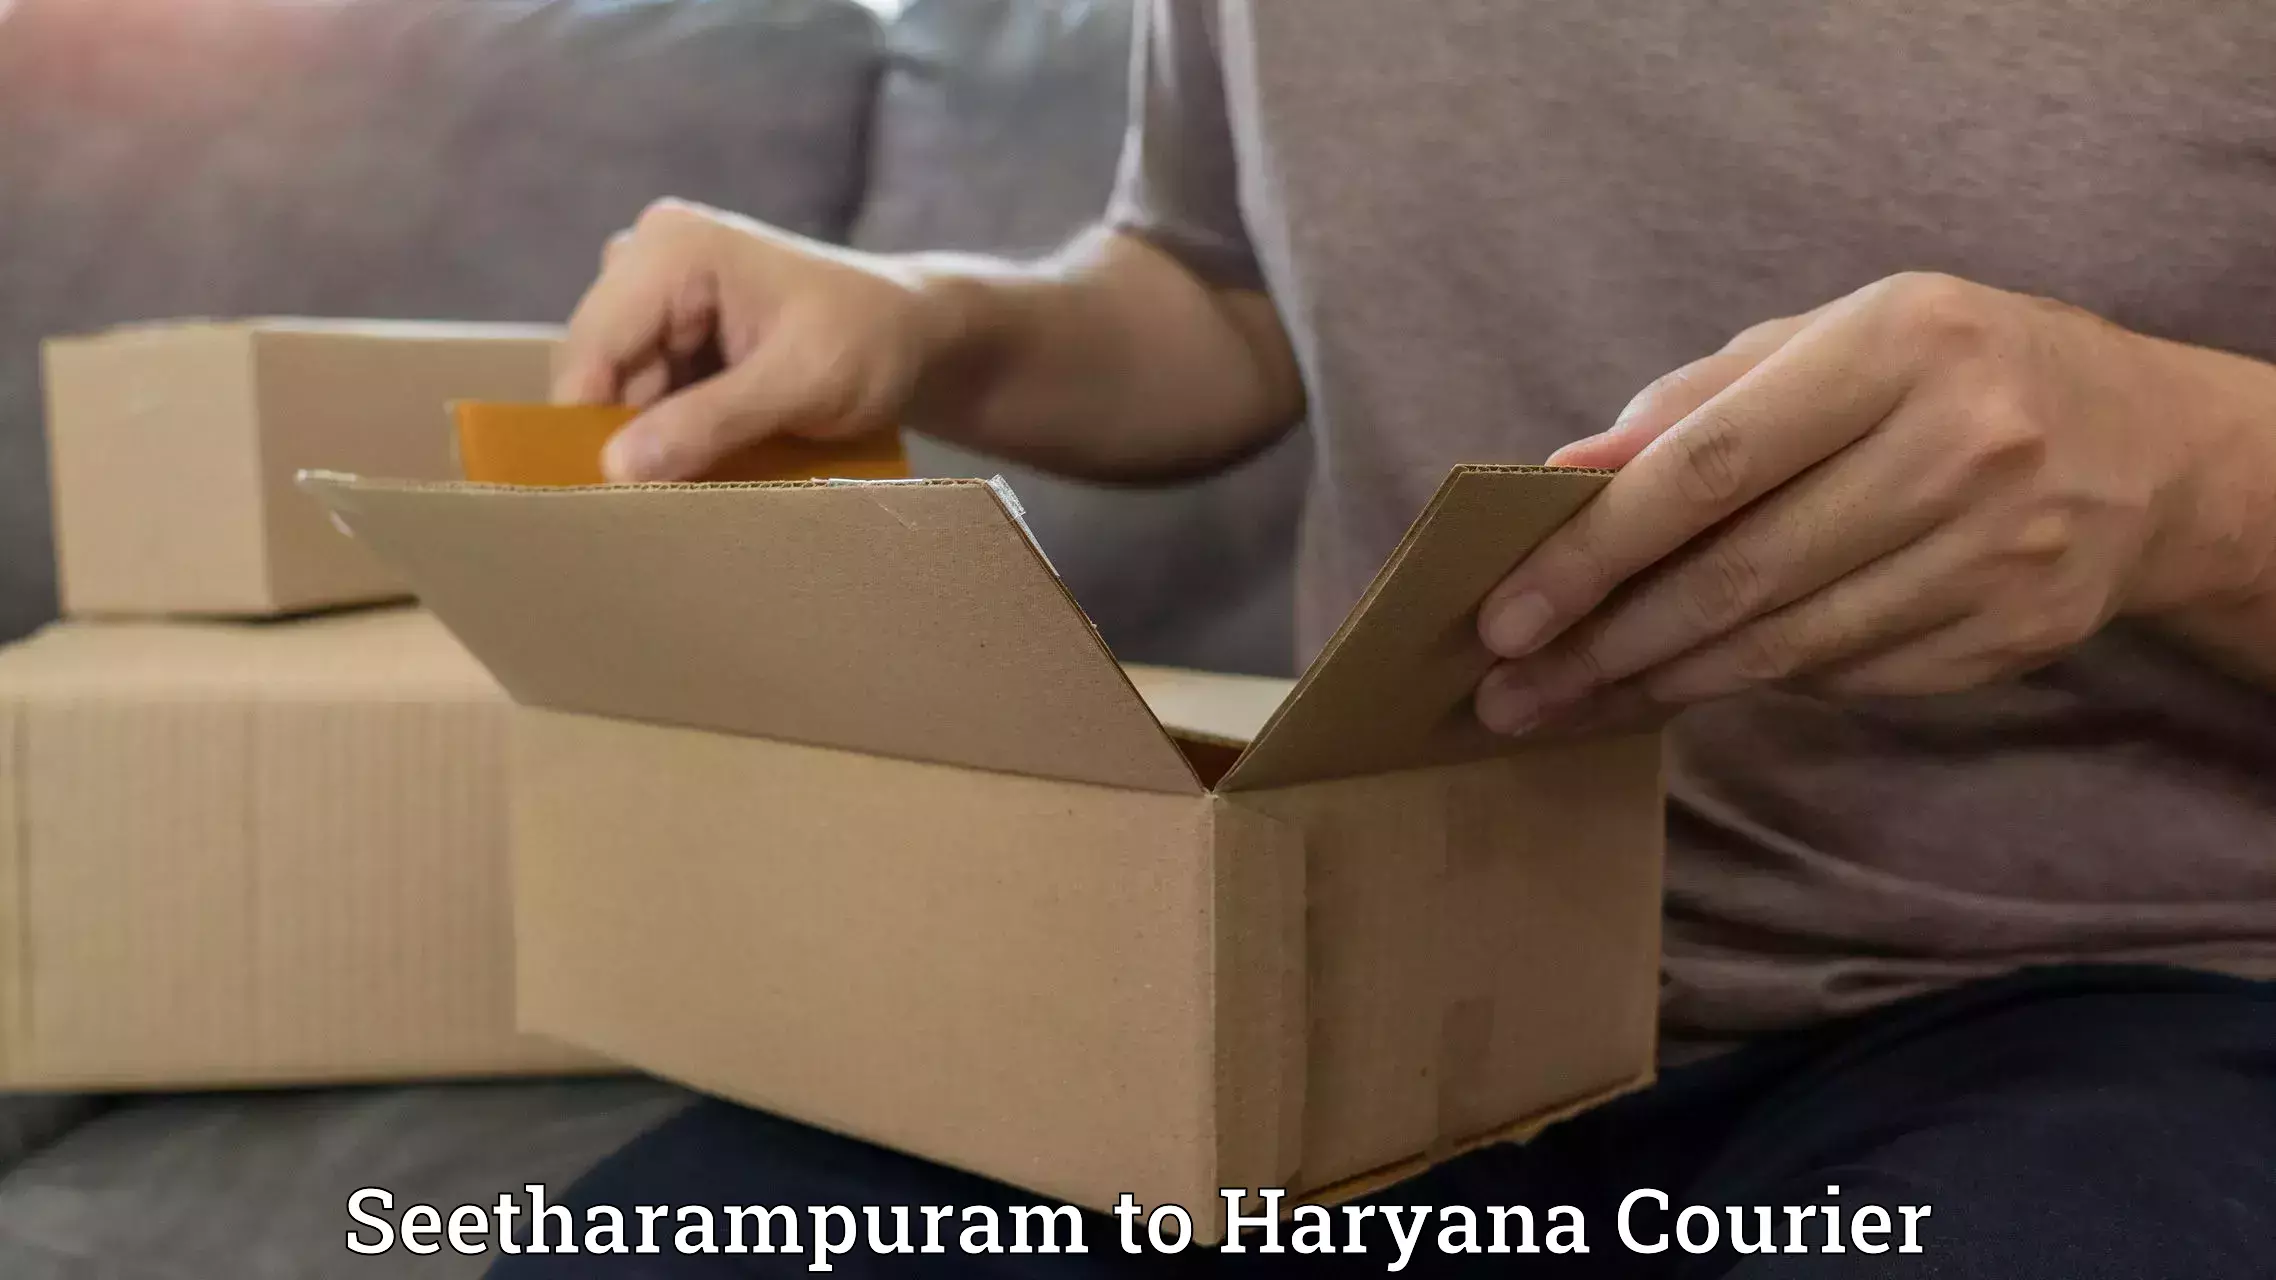 Express logistics service Seetharampuram to Bilaspur Haryana